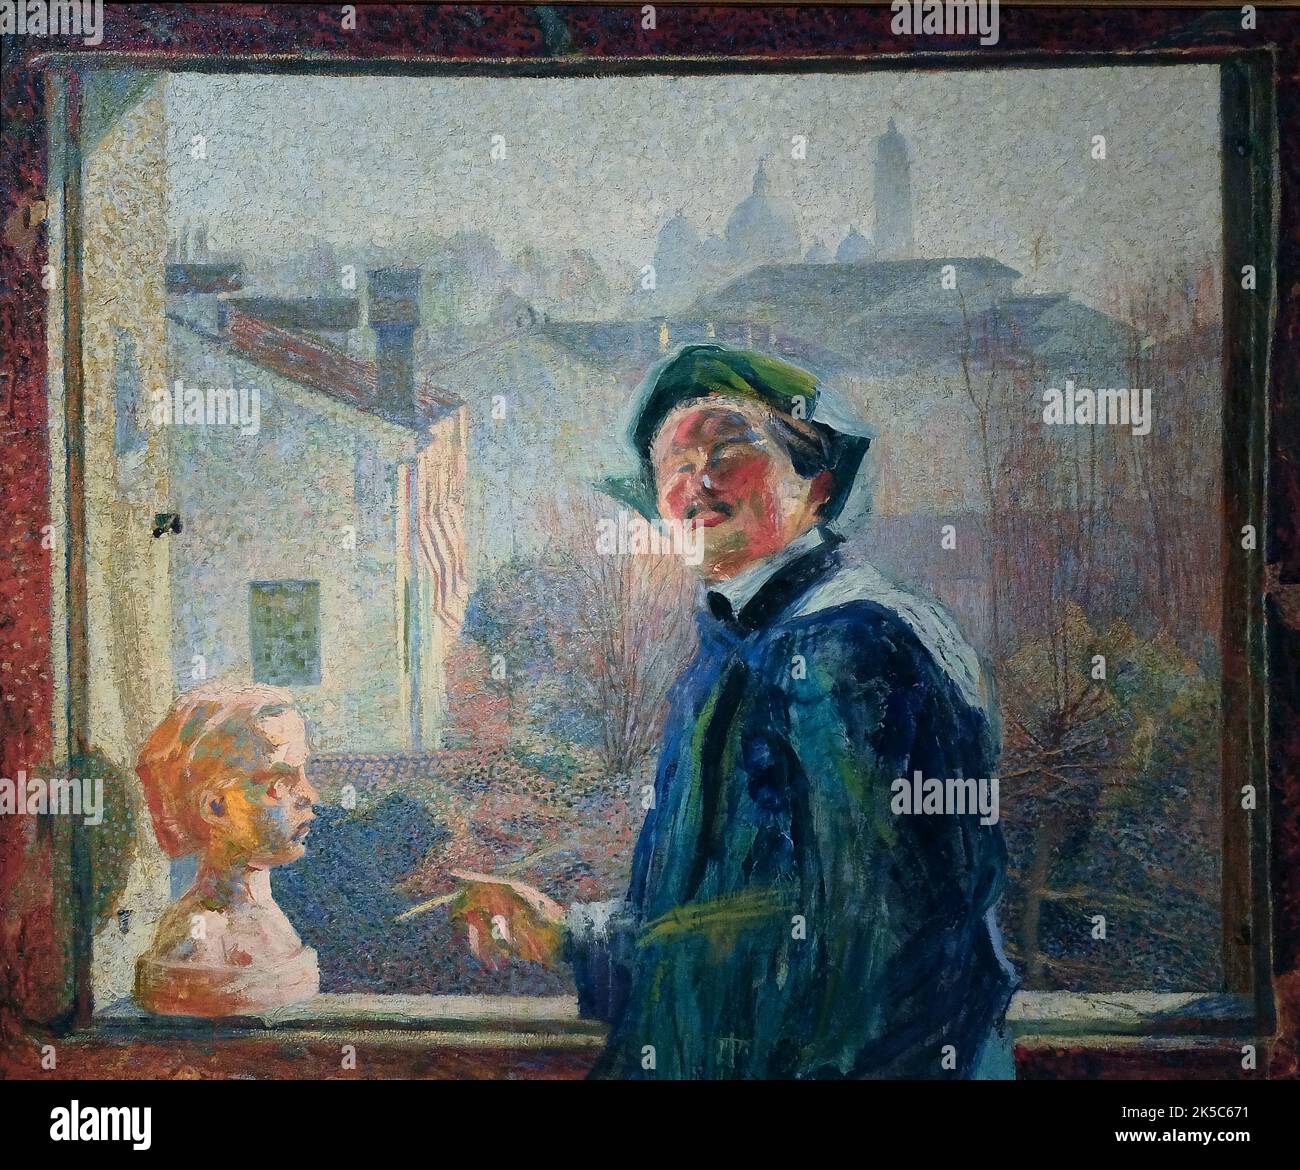 Ritratto di scultore. Valerio Brocchi (Portrait d'un sculpteur. Valerio Brocchi) (1907) par Umberto Boccioni (1882-1916). Huile sur toile, 102 x 124 cm. Banque D'Images